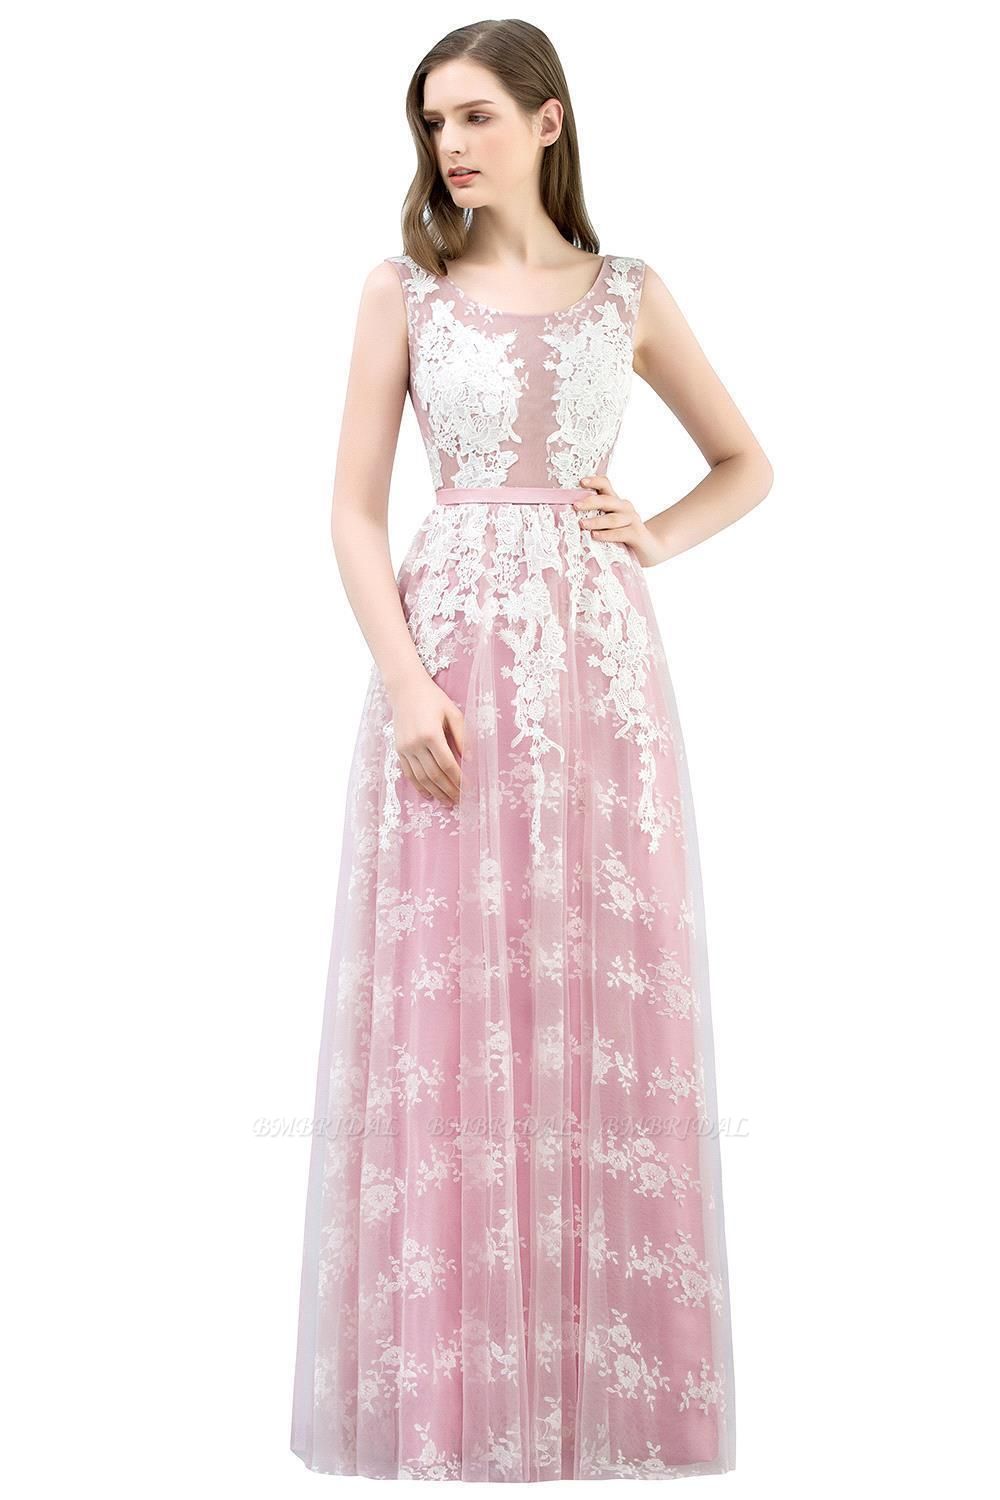 BMbridal Elegantes rosa ärmelloses Ballkleid Tüll lange Abendkleider mit Spitzenapplikationen